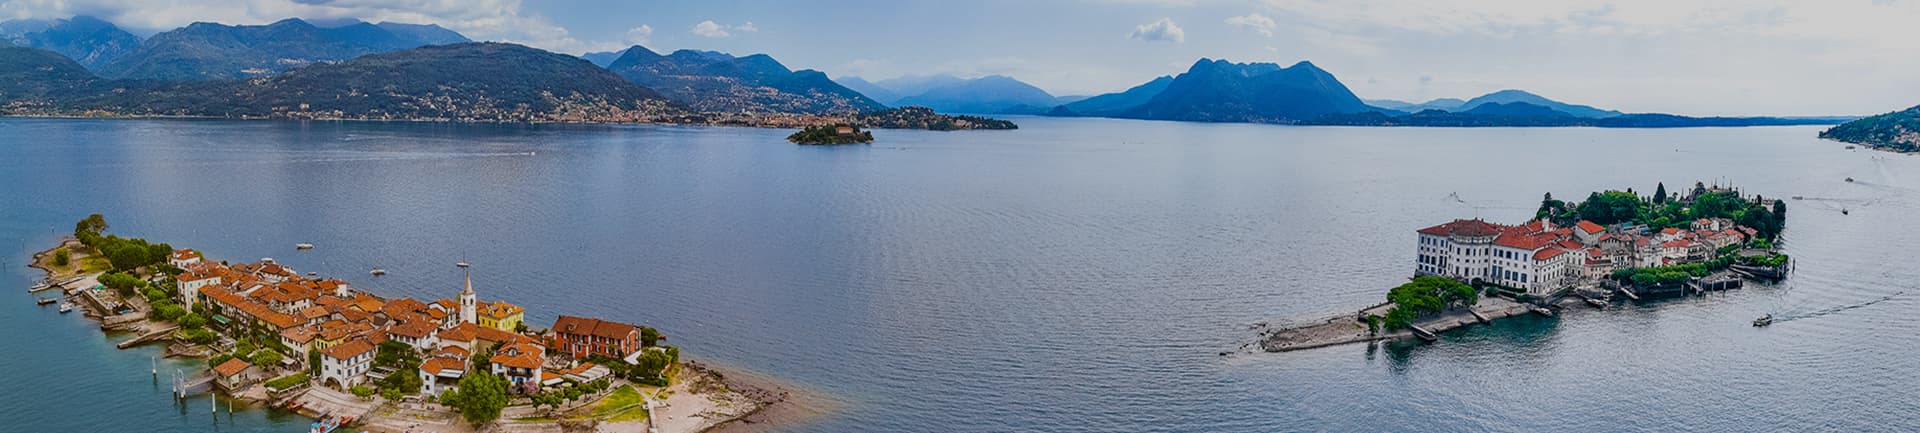 Piedmont, fairytale routes on Lake Maggiore